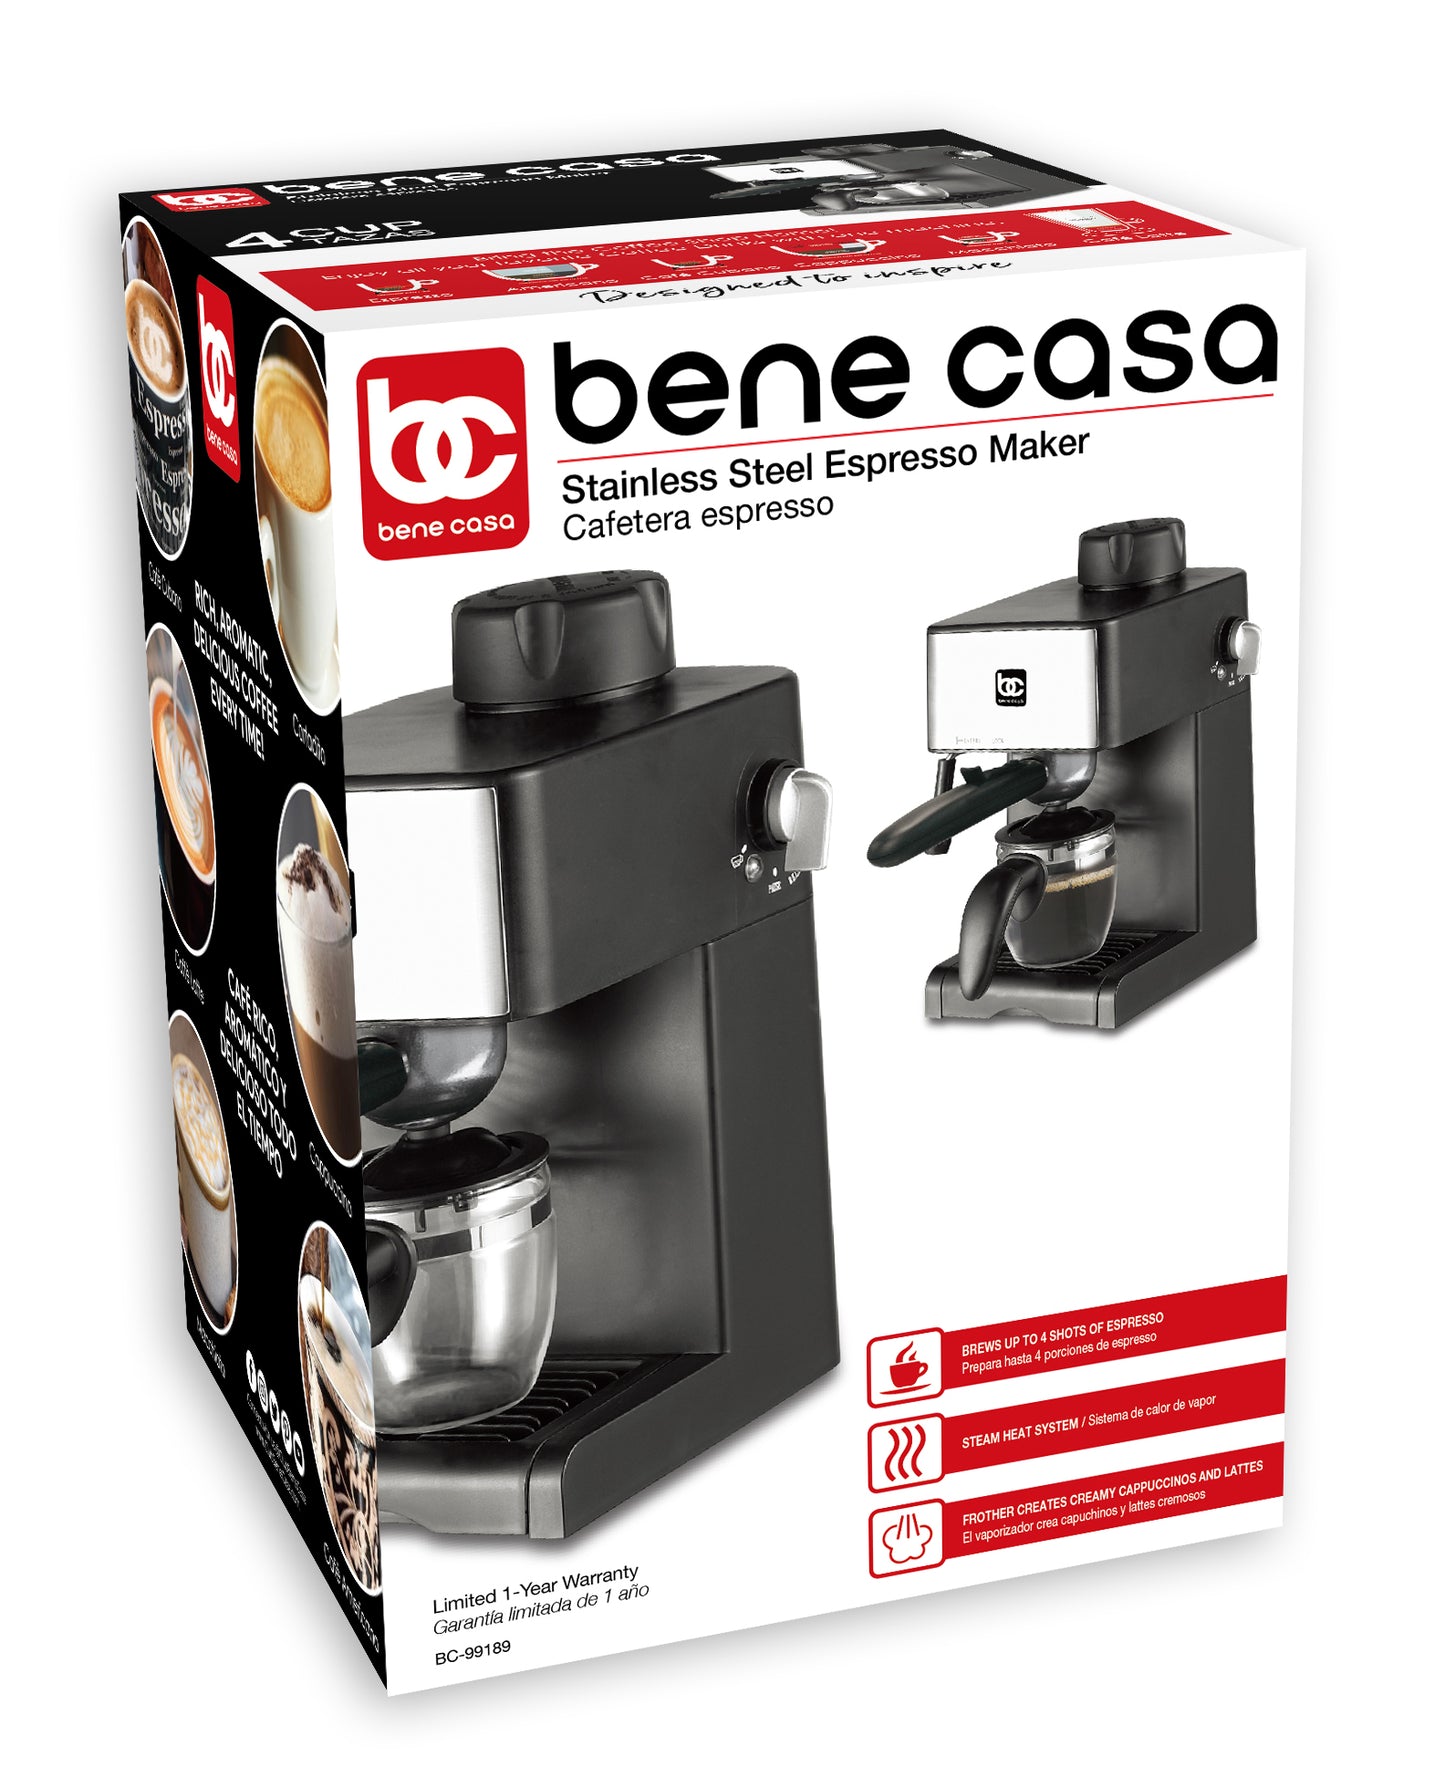 frother, maker; cappuccino, espresso milk latt coffee, Bene Casa 4-cup